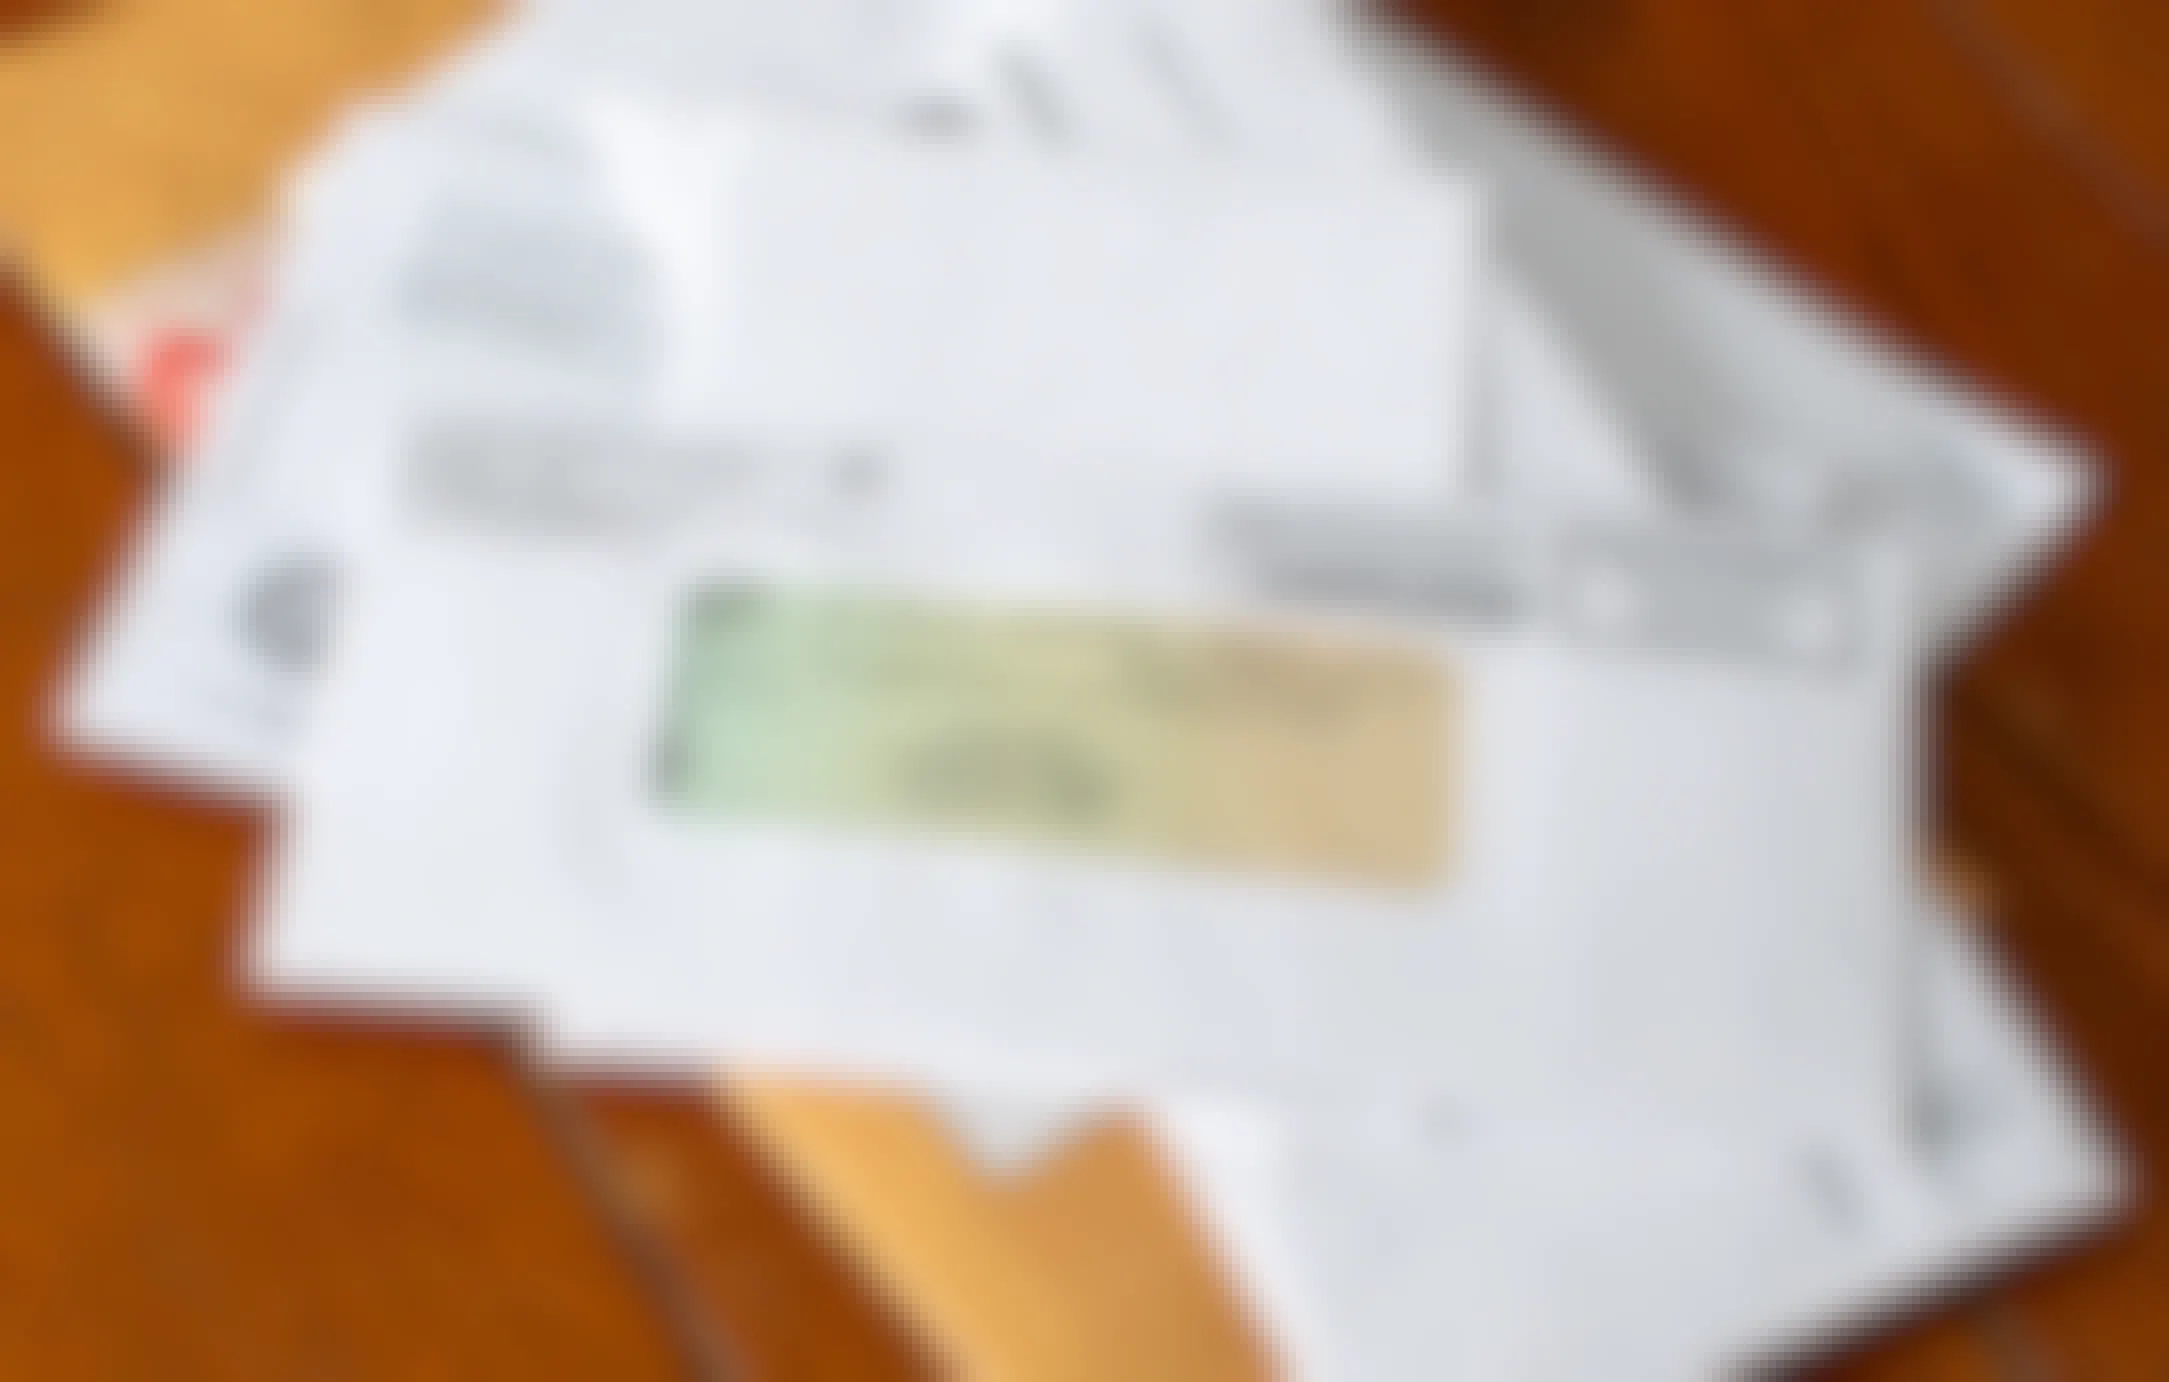 IRS tax refund mail